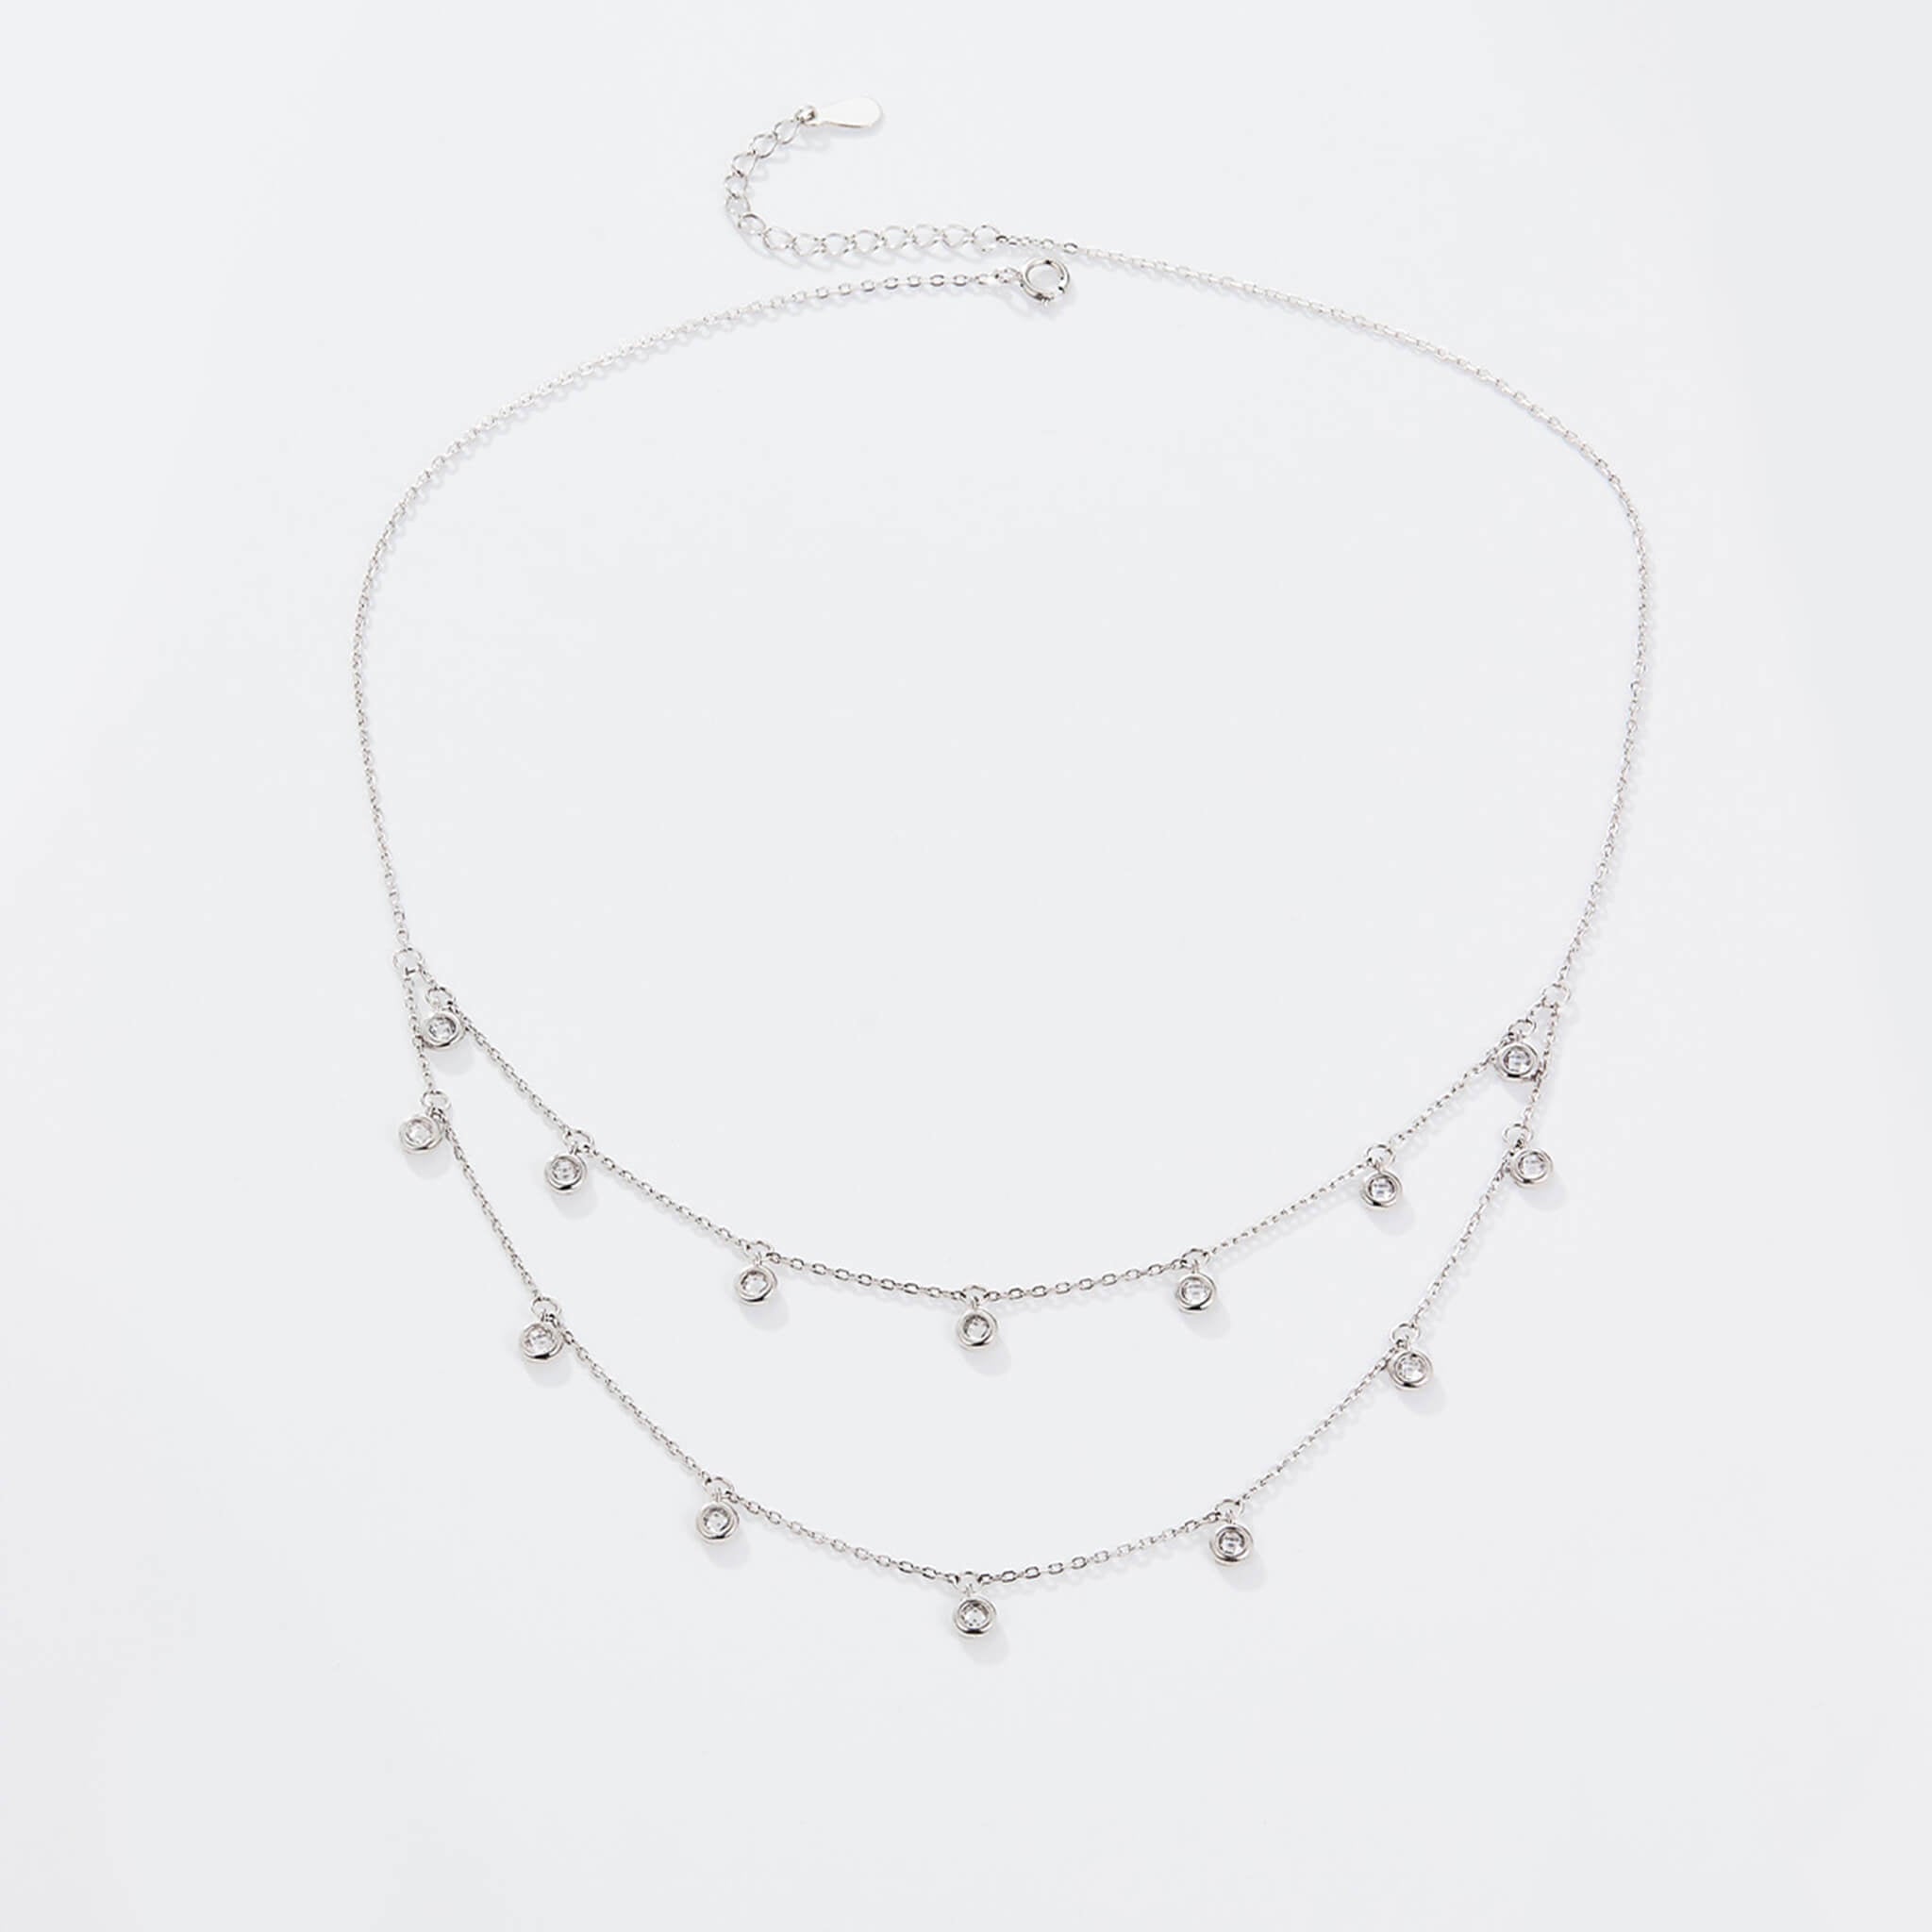 Versatile Minimalist 925 Silver Double-Layer Cubic Zirconia Necklace  UponBasics Necklace Silver 